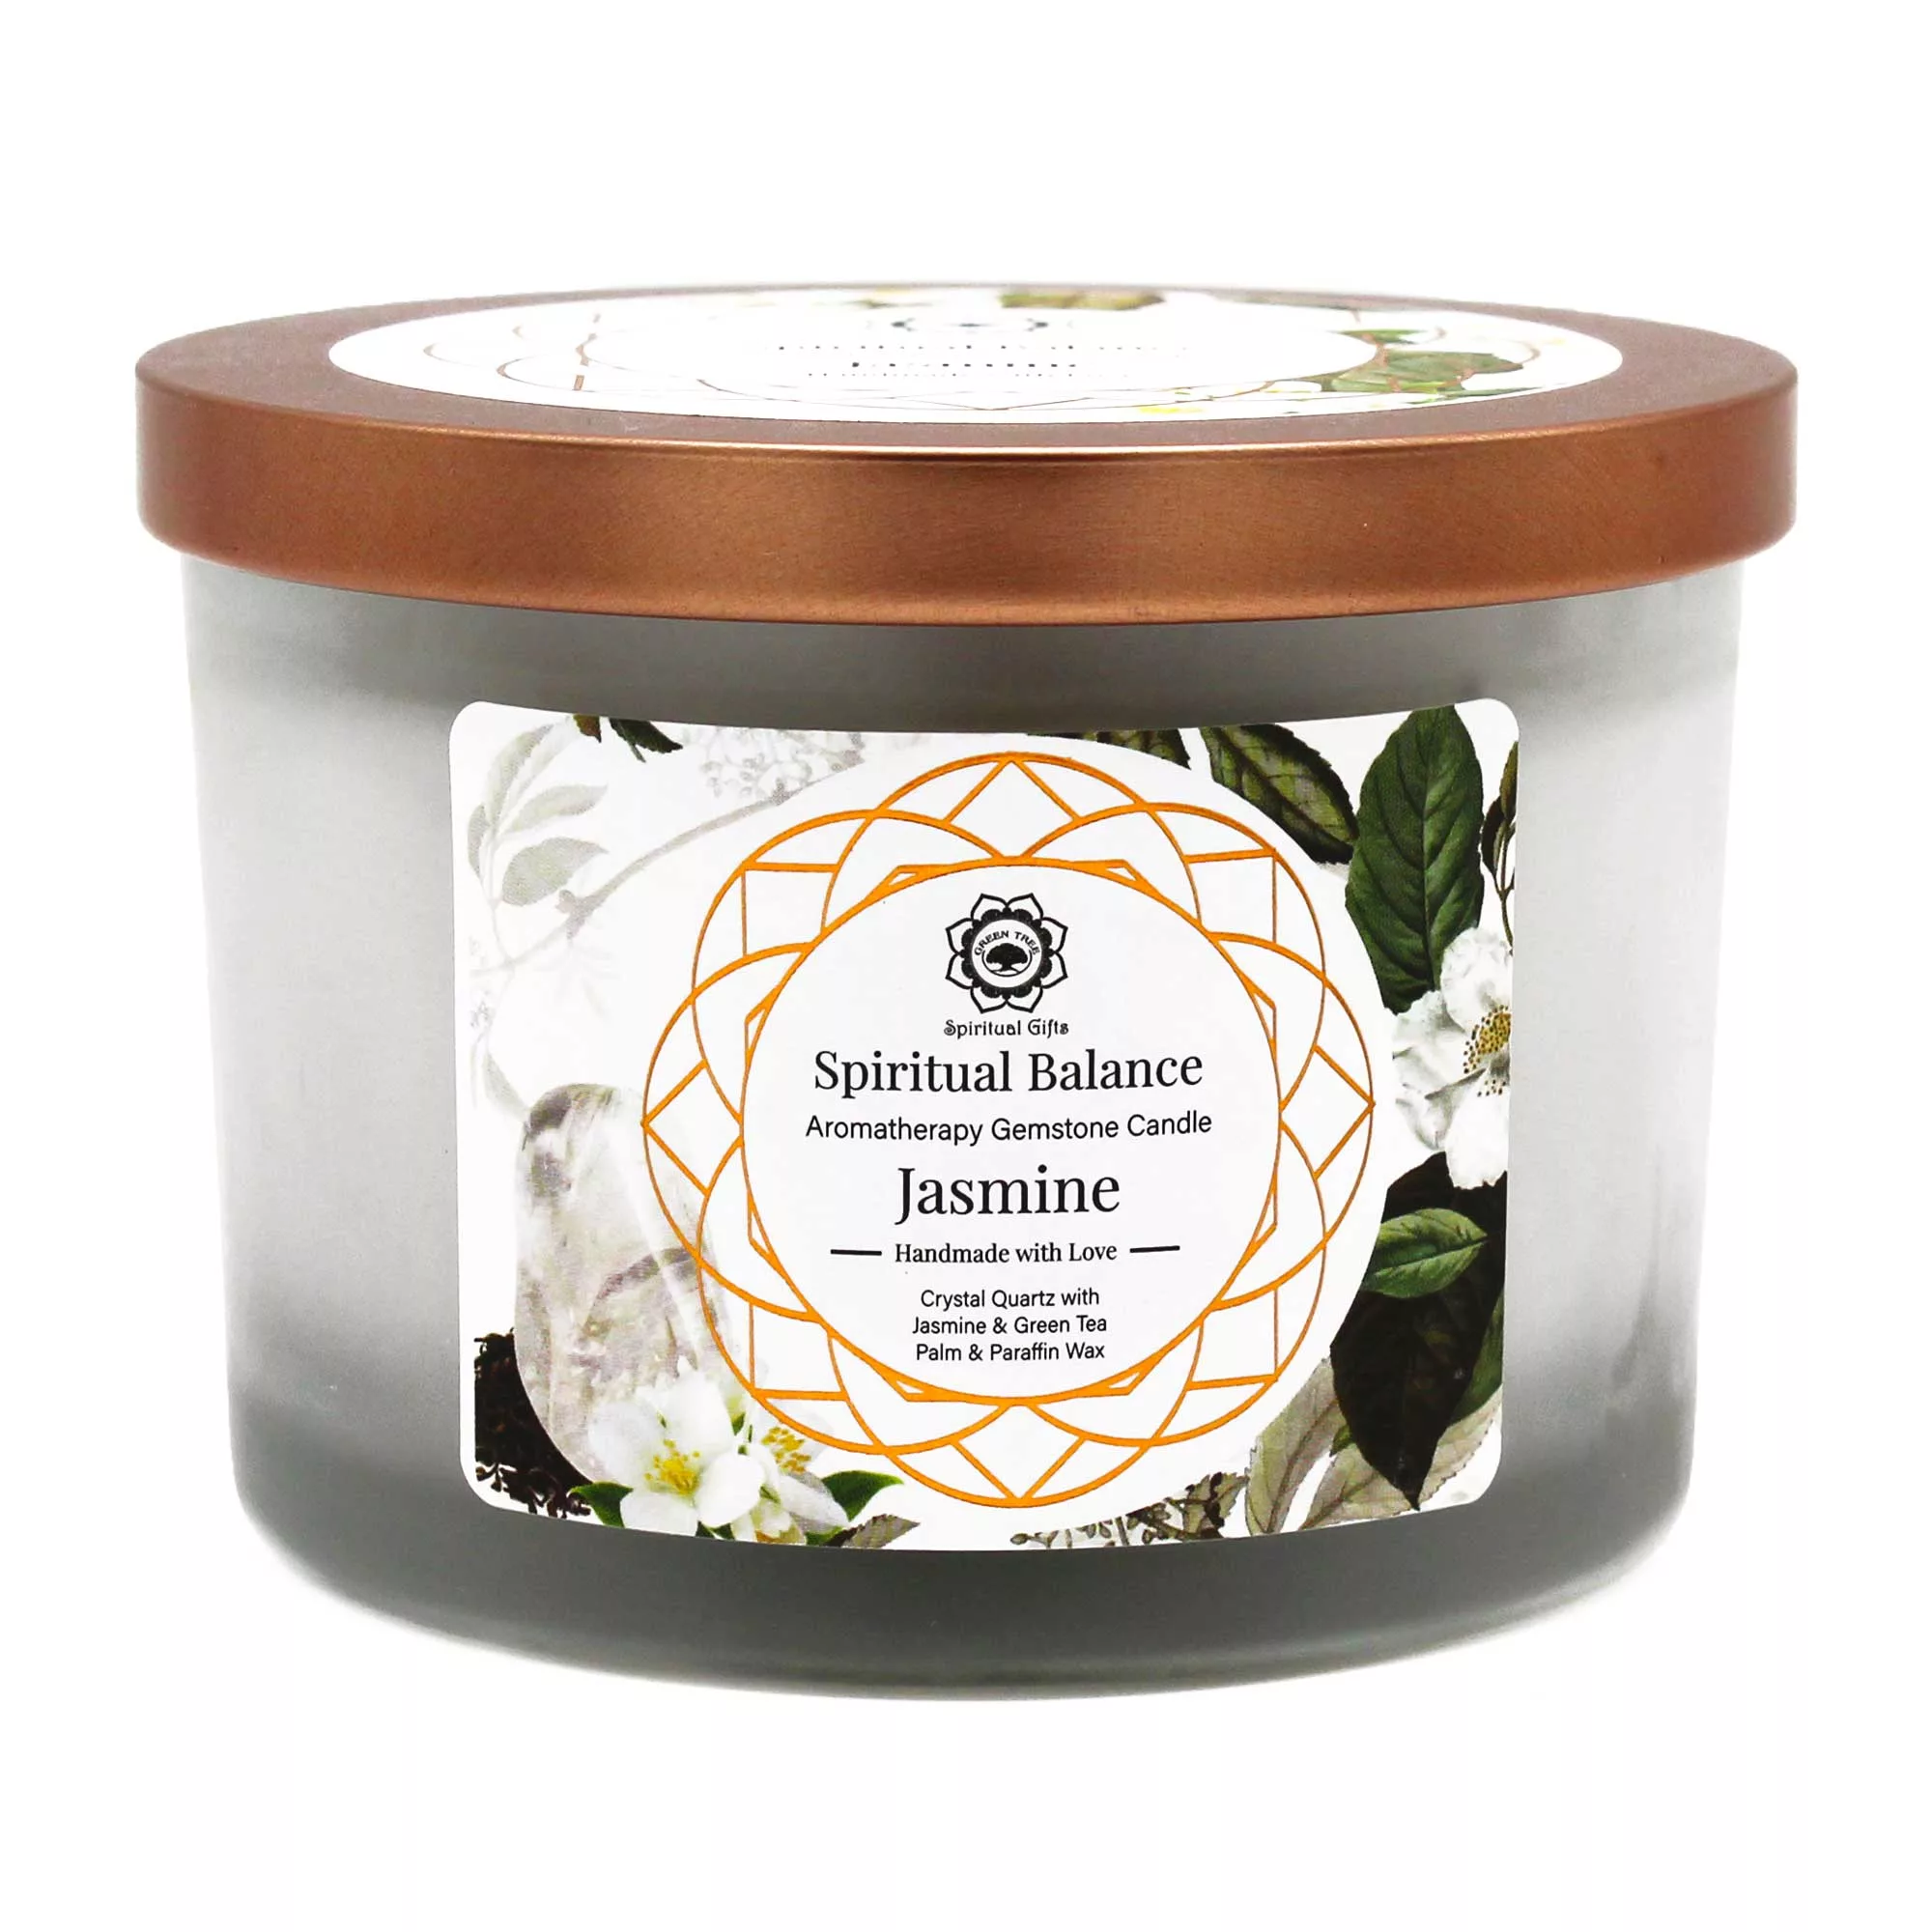 Jasmine and Crystal Quartz Gemstone Candle – Spiritual Balance